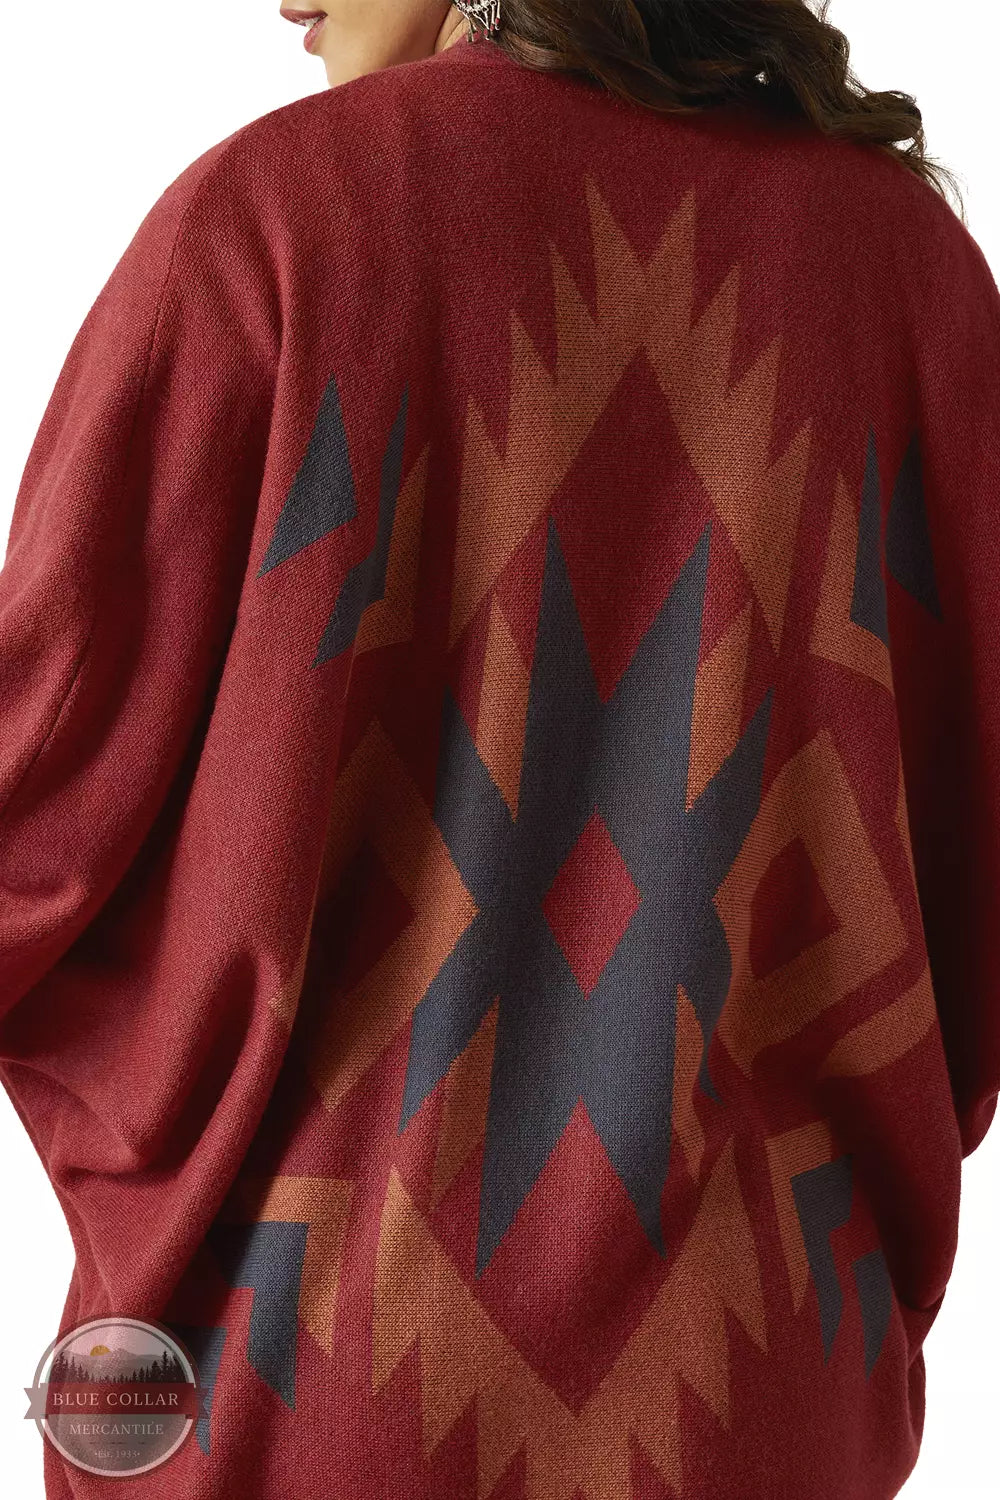 Ariat 10046275 Terra Cardigan Sweater in Burnt Russet Detail View